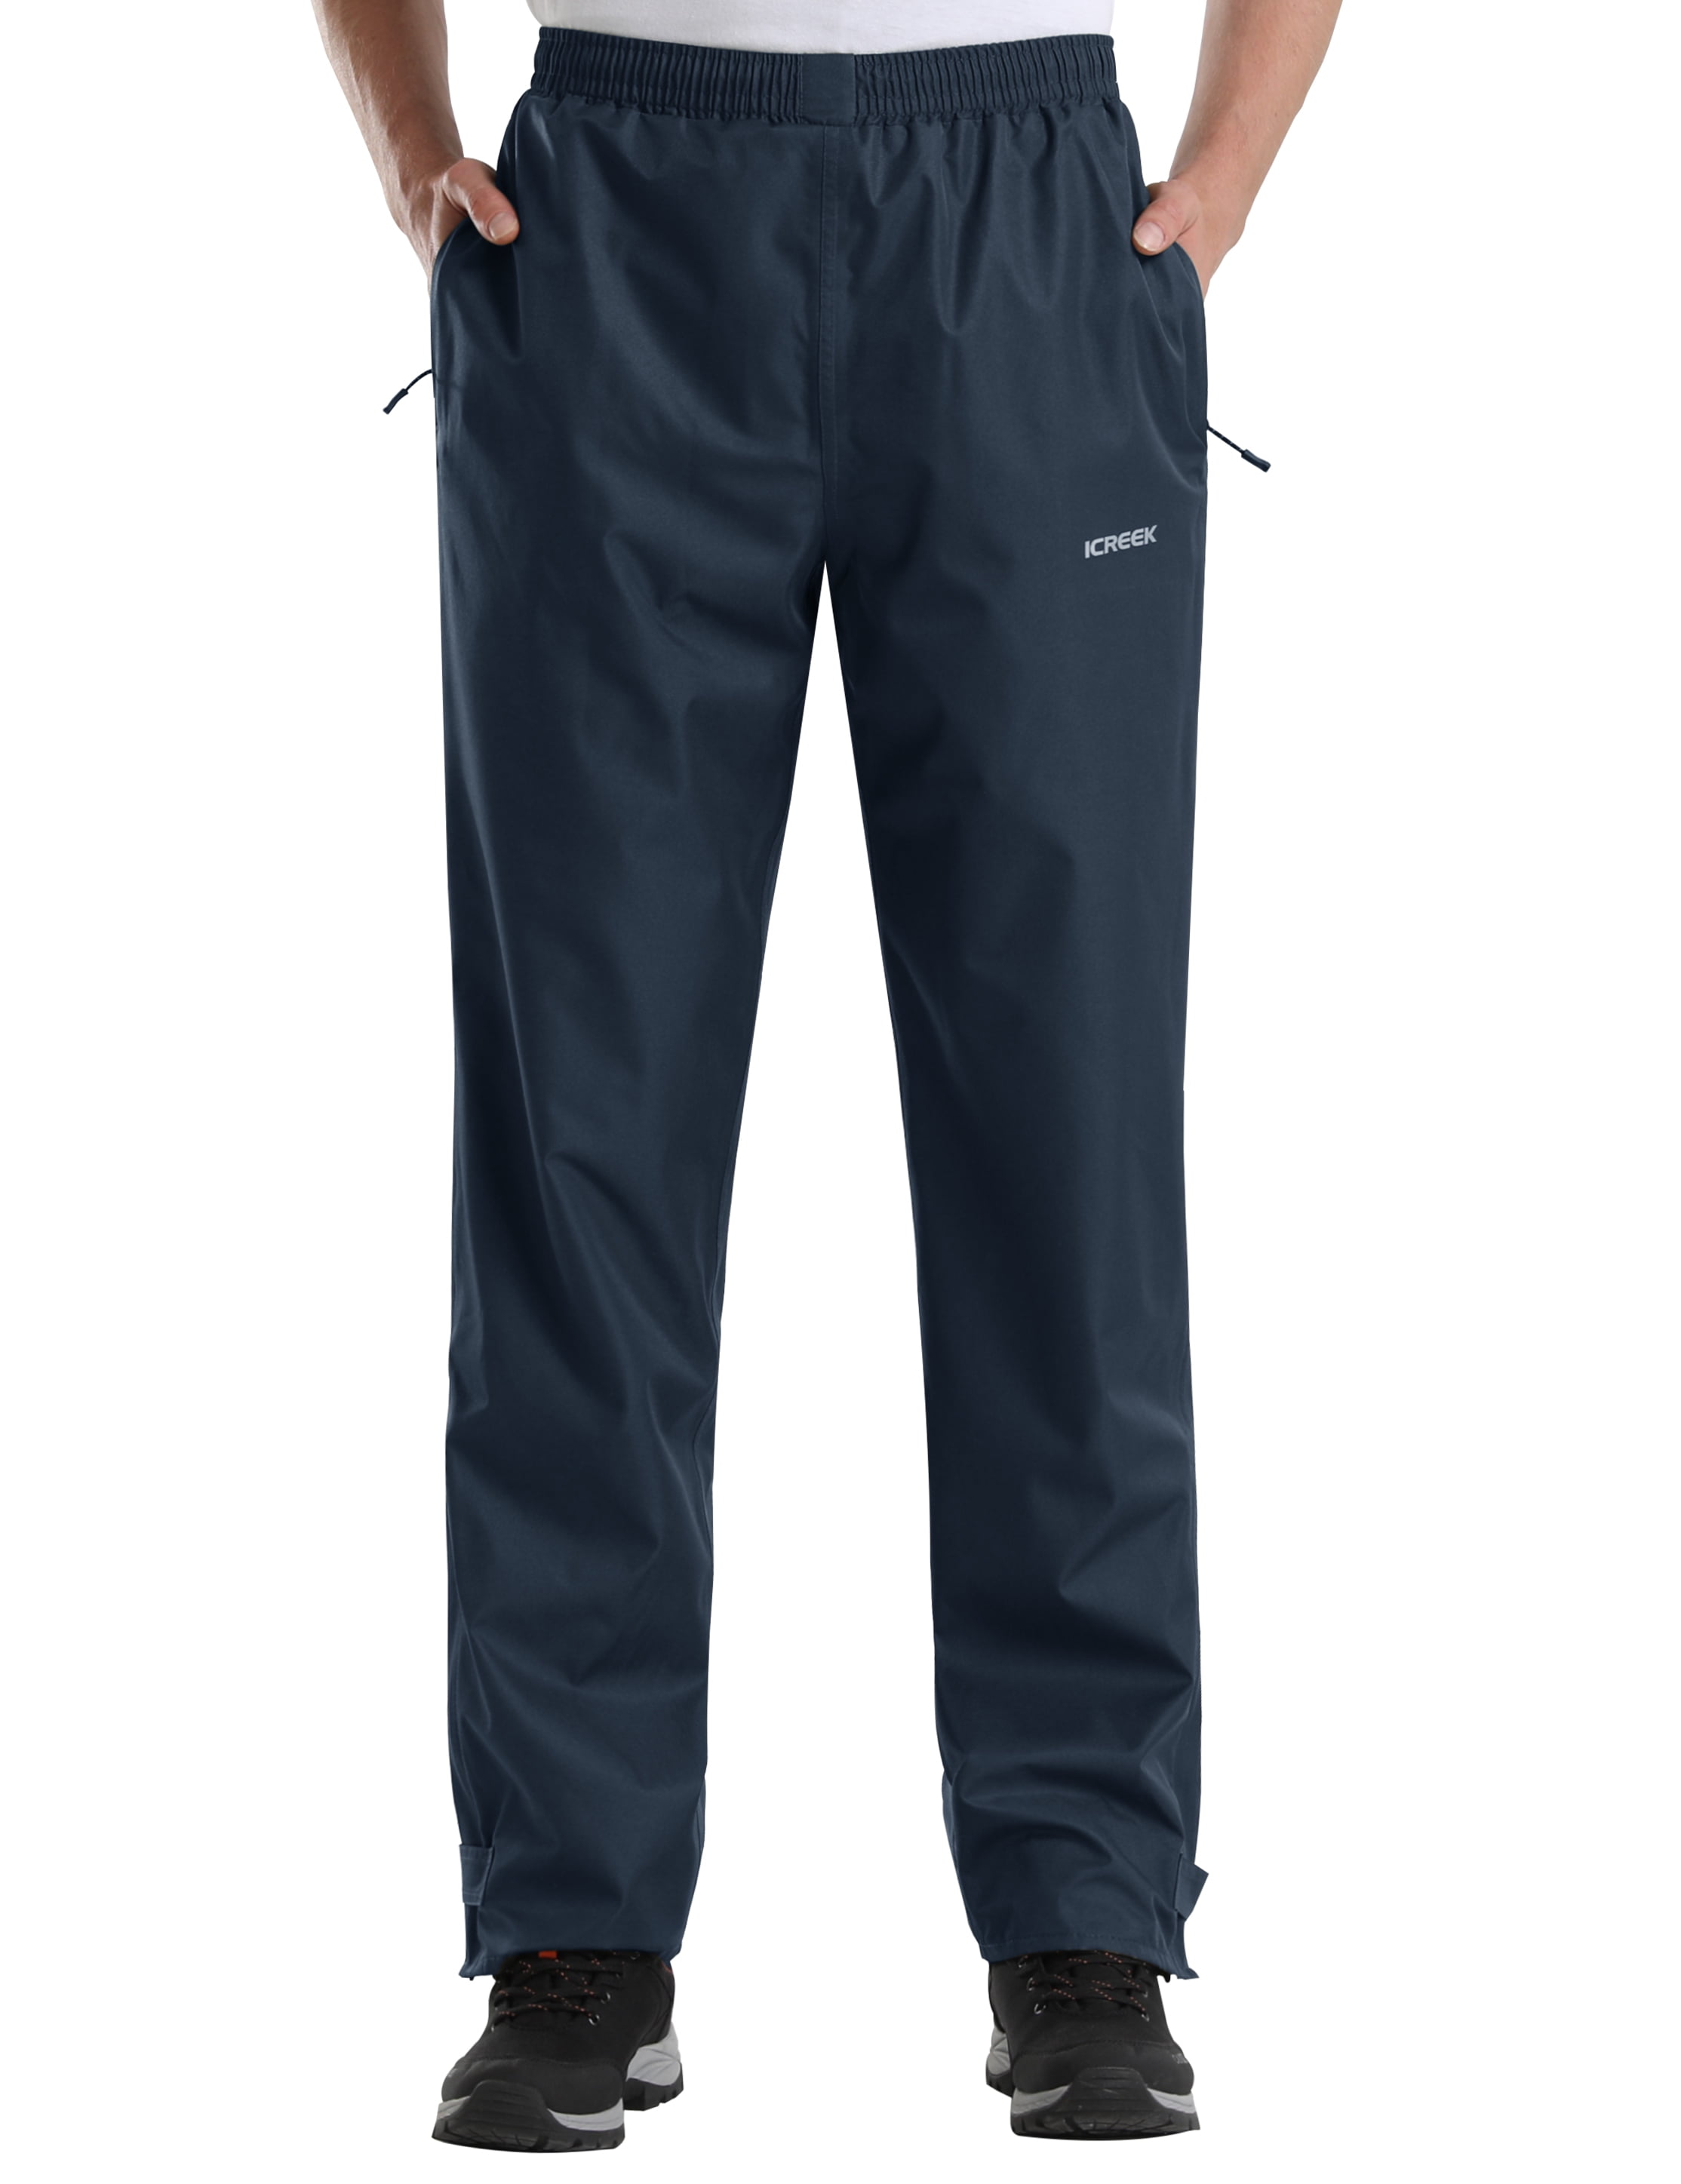 iCreek Men's Rain Pants Waterproof Zipper Pocket Windproof Hiking